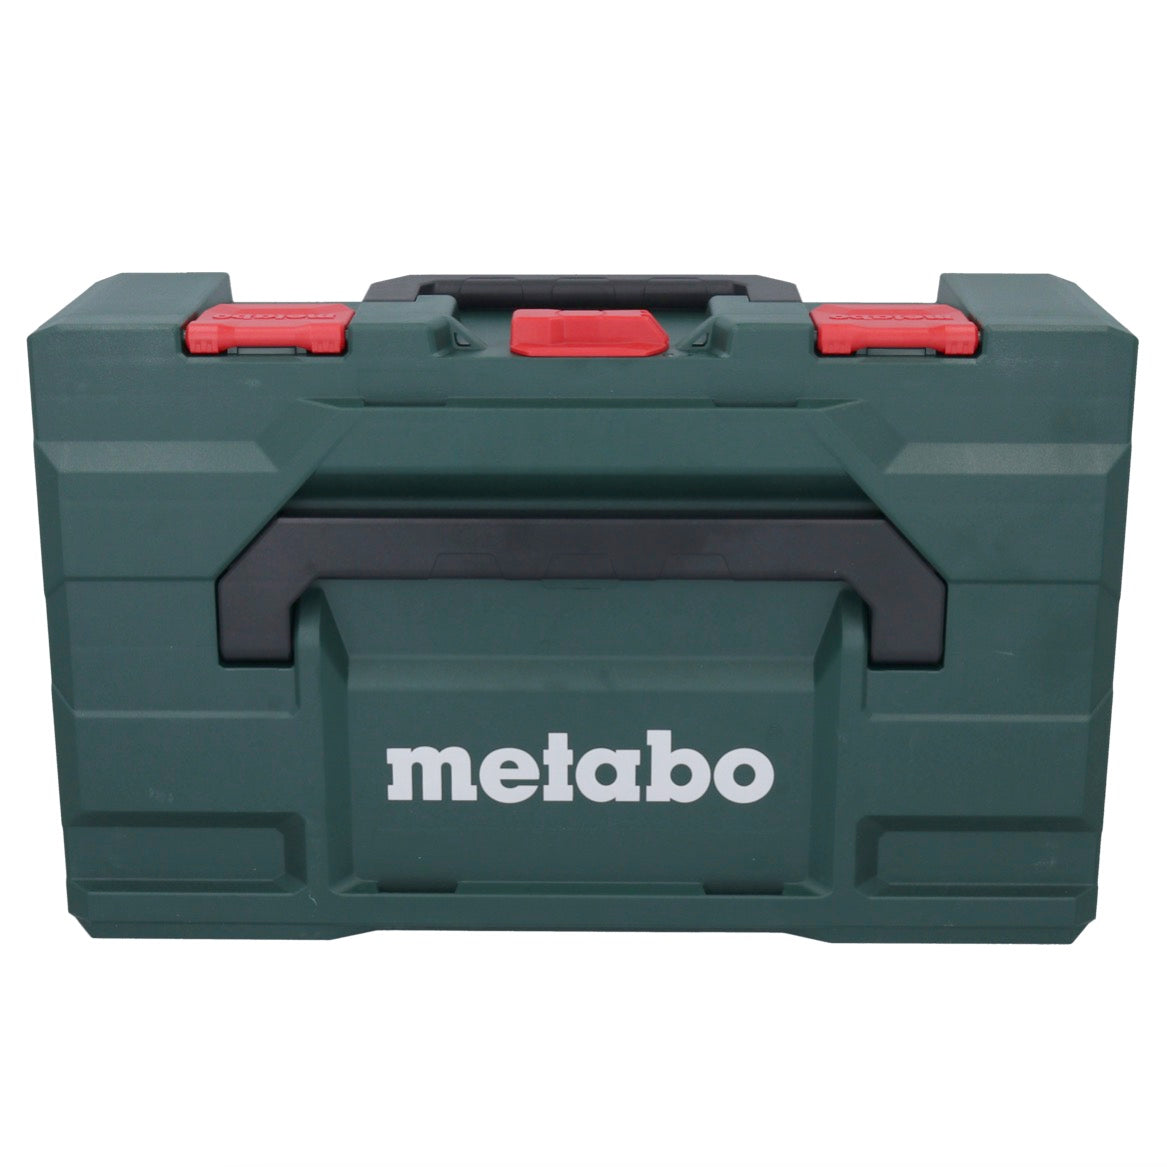 Metabo WPBA 18 LTX BL 15-125 Quick DS Akku-Winkelschleifer 18 V 125 mm Brushless + metaBOX ( 601734840 ) - ohne Akku, ohne Ladegerät - Toolbrothers